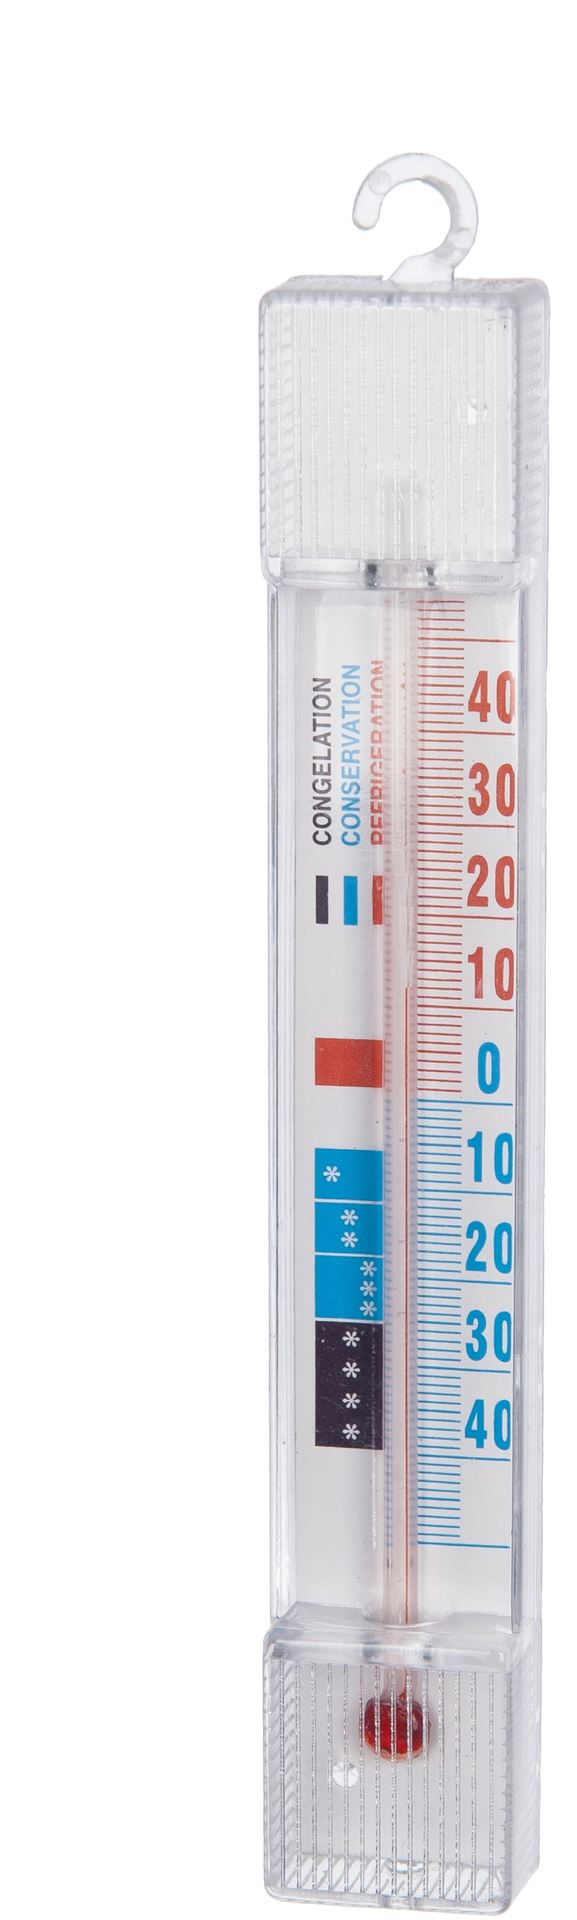 Diepvriesthermometer-H16x2-4x1-5cm